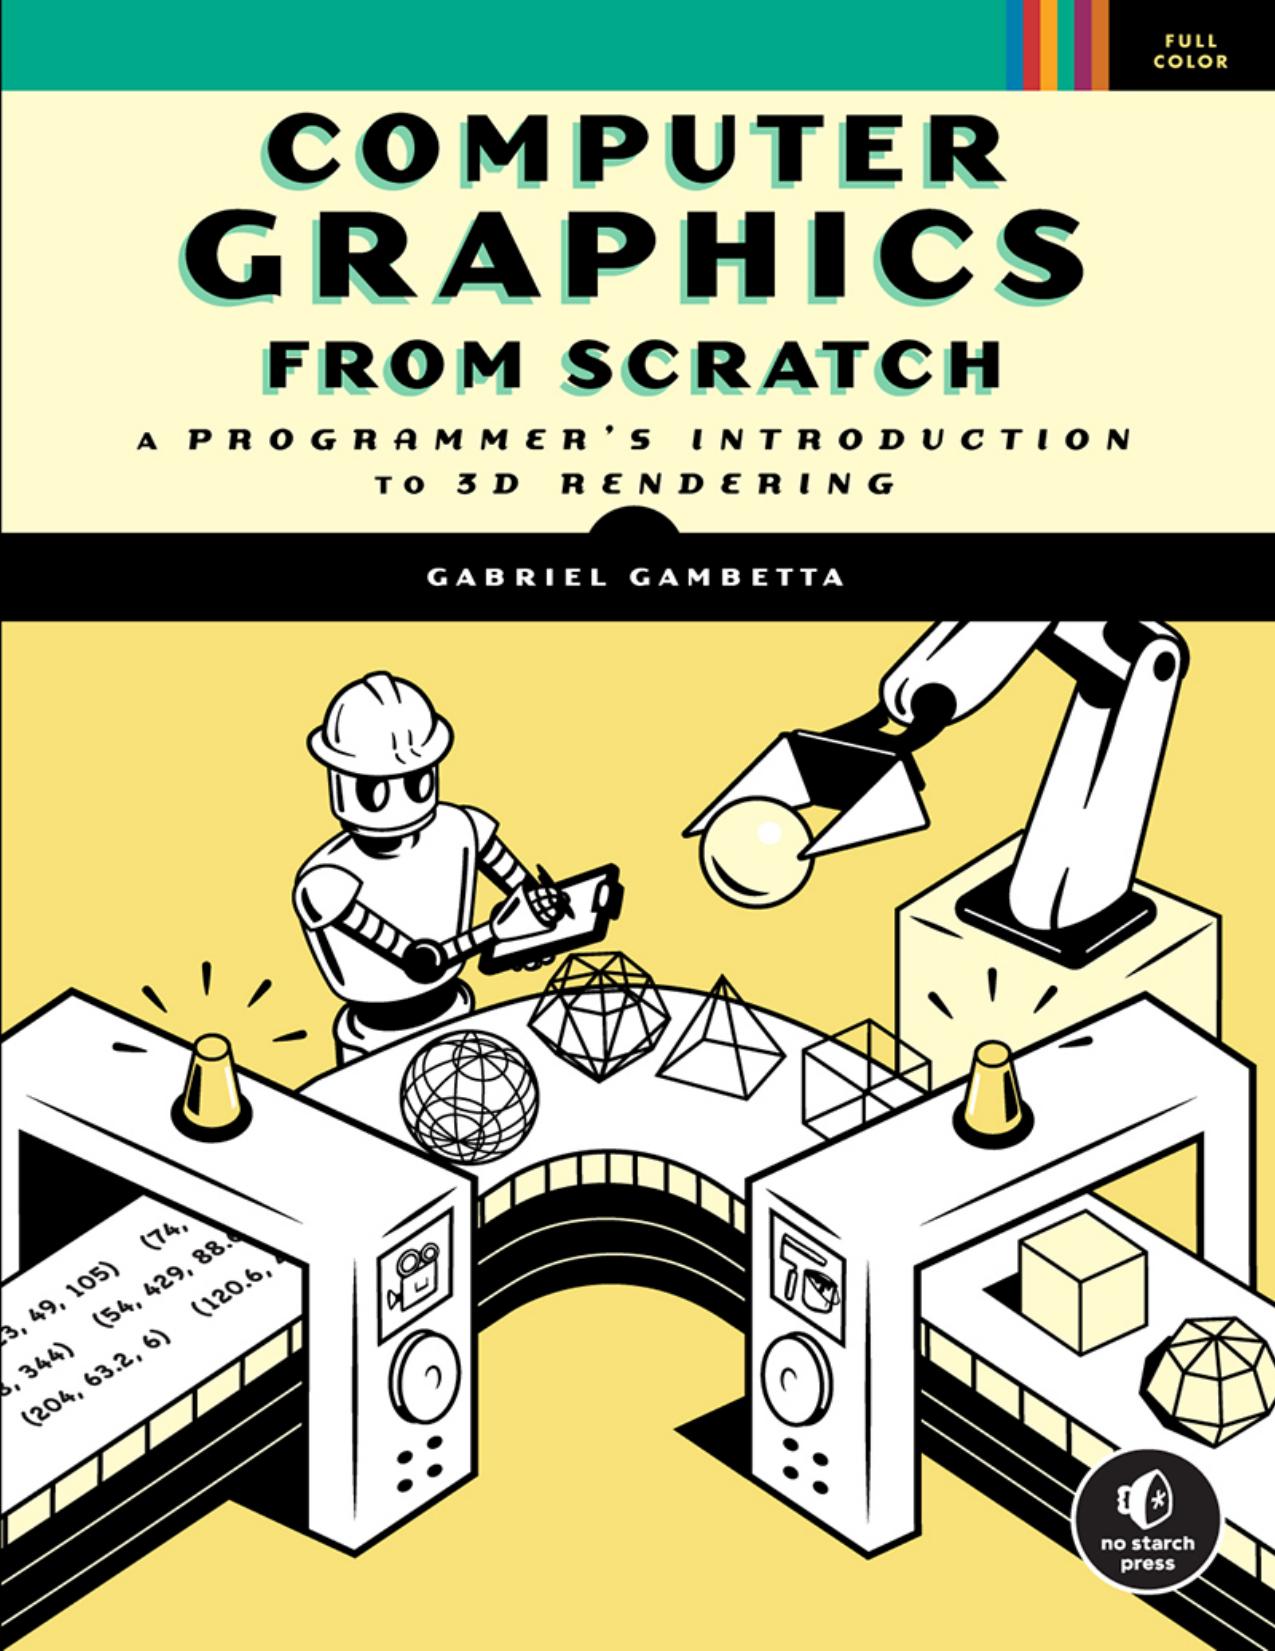 Computer Graphics from Scratch by Gabriel Gambetta